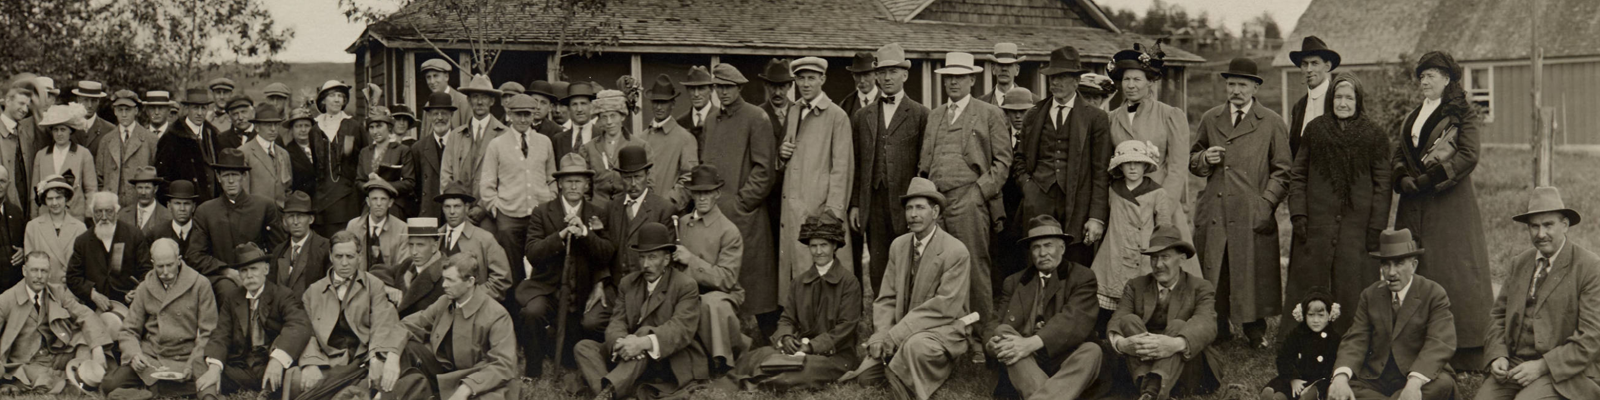 Vintage photo of Guernsey Breeders Association Jean du Luth Farm, Duluth, Minnesota